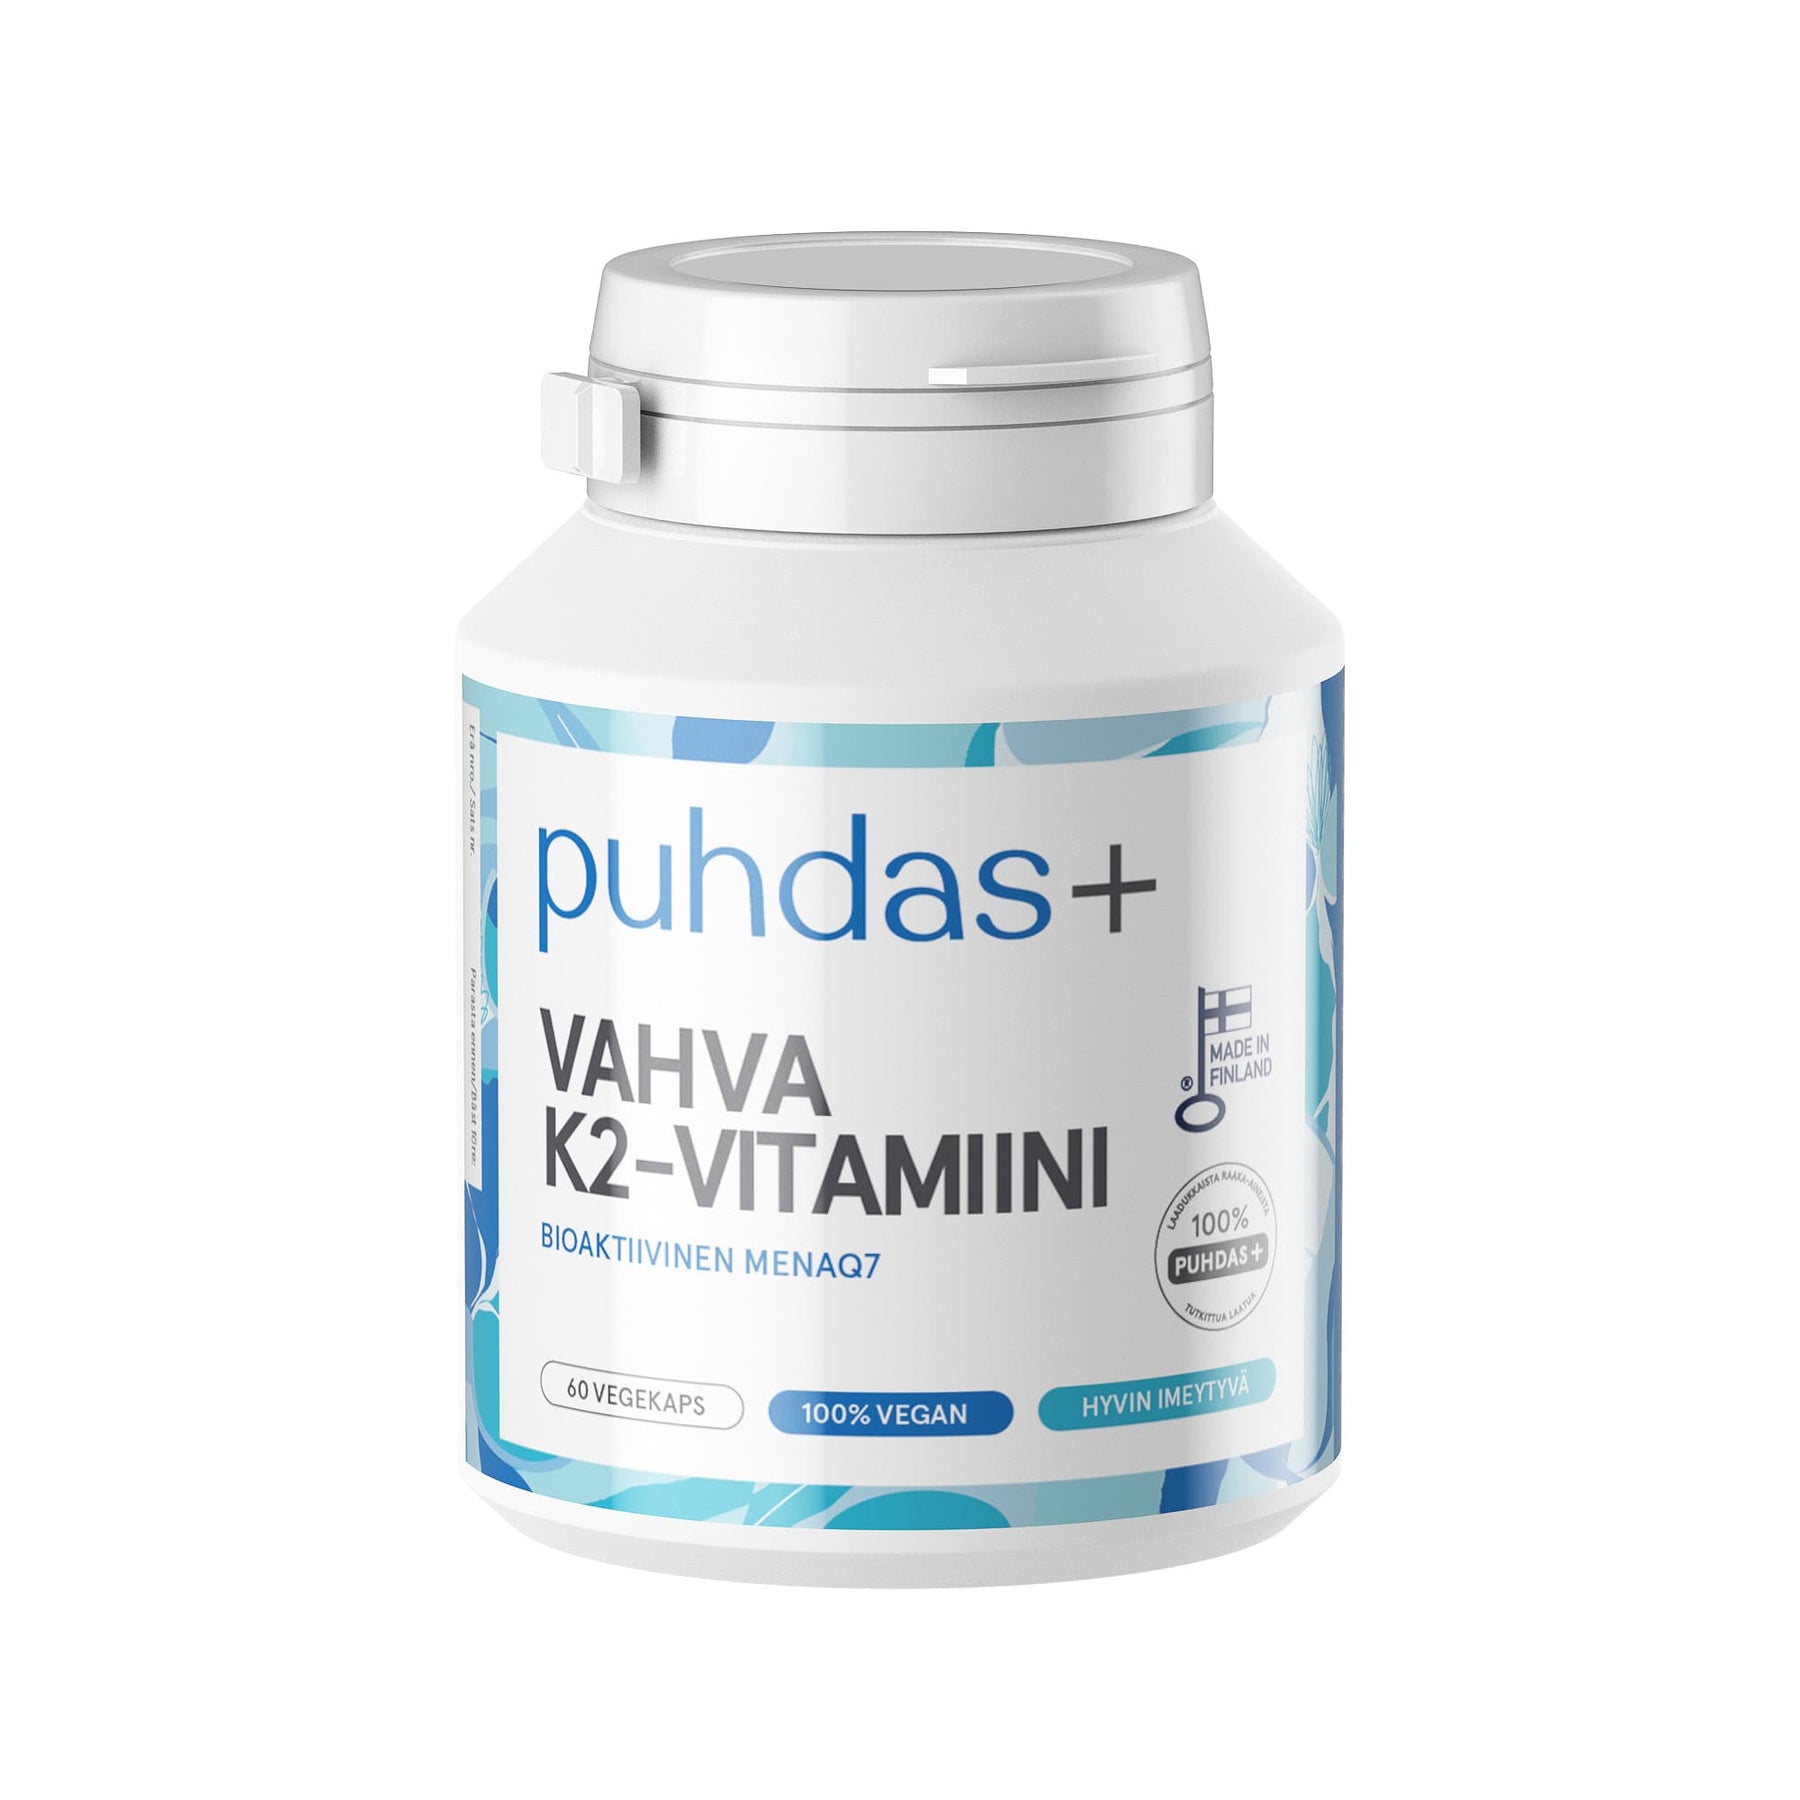 Puhdas+ Vahva K2-vitamiini 60 kaps.